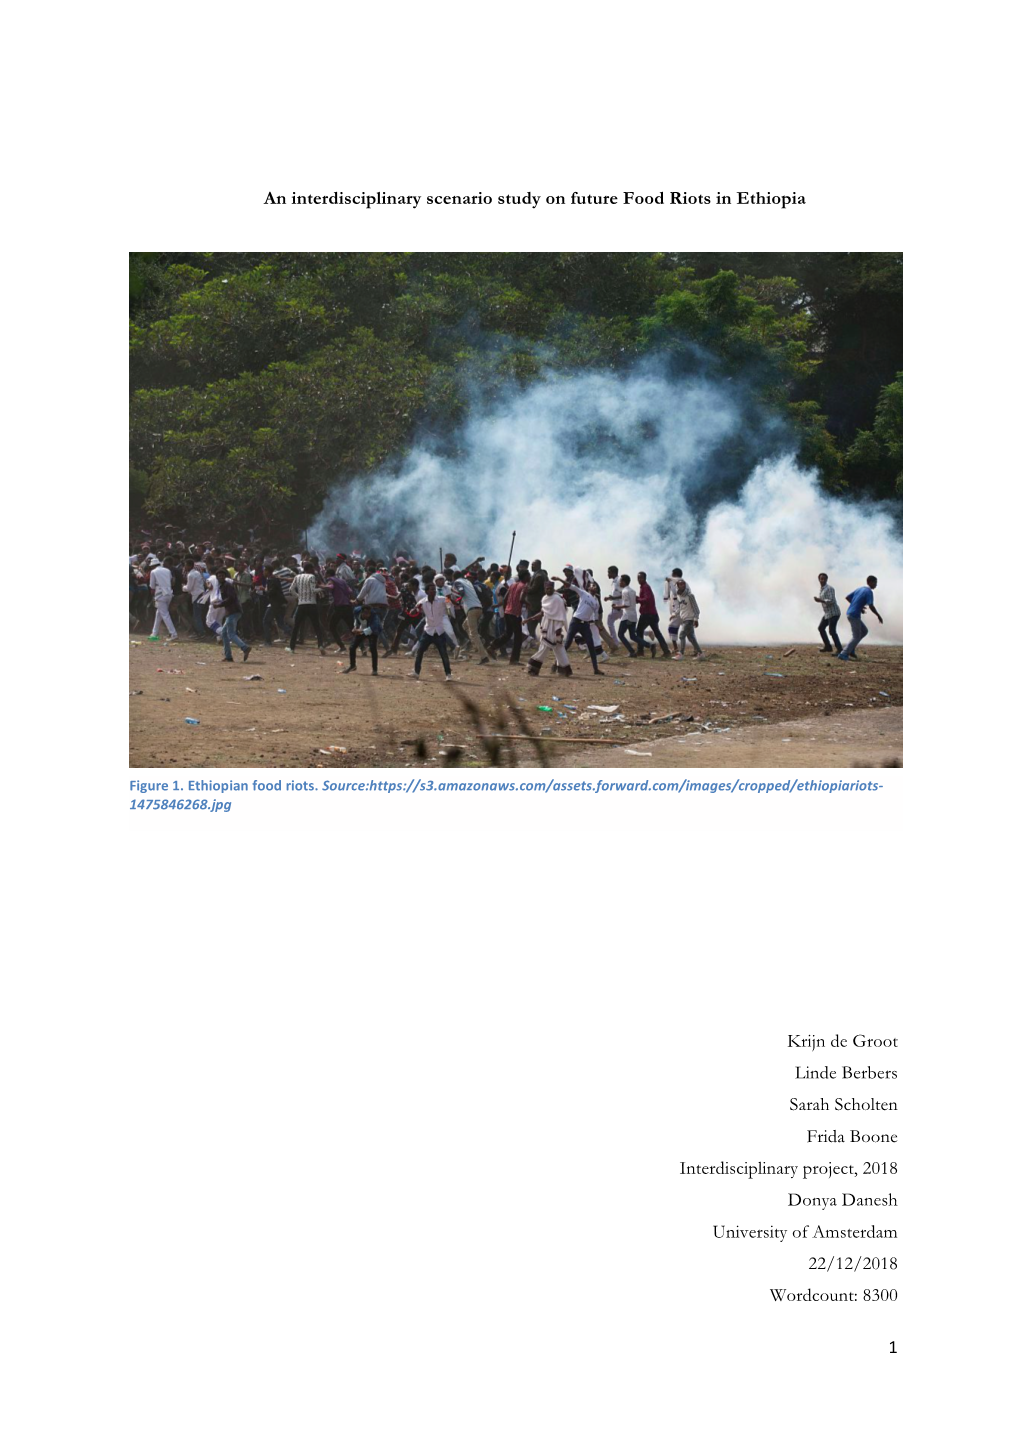 1 an Interdisciplinary Scenario Study on Future Food Riots in Ethiopia